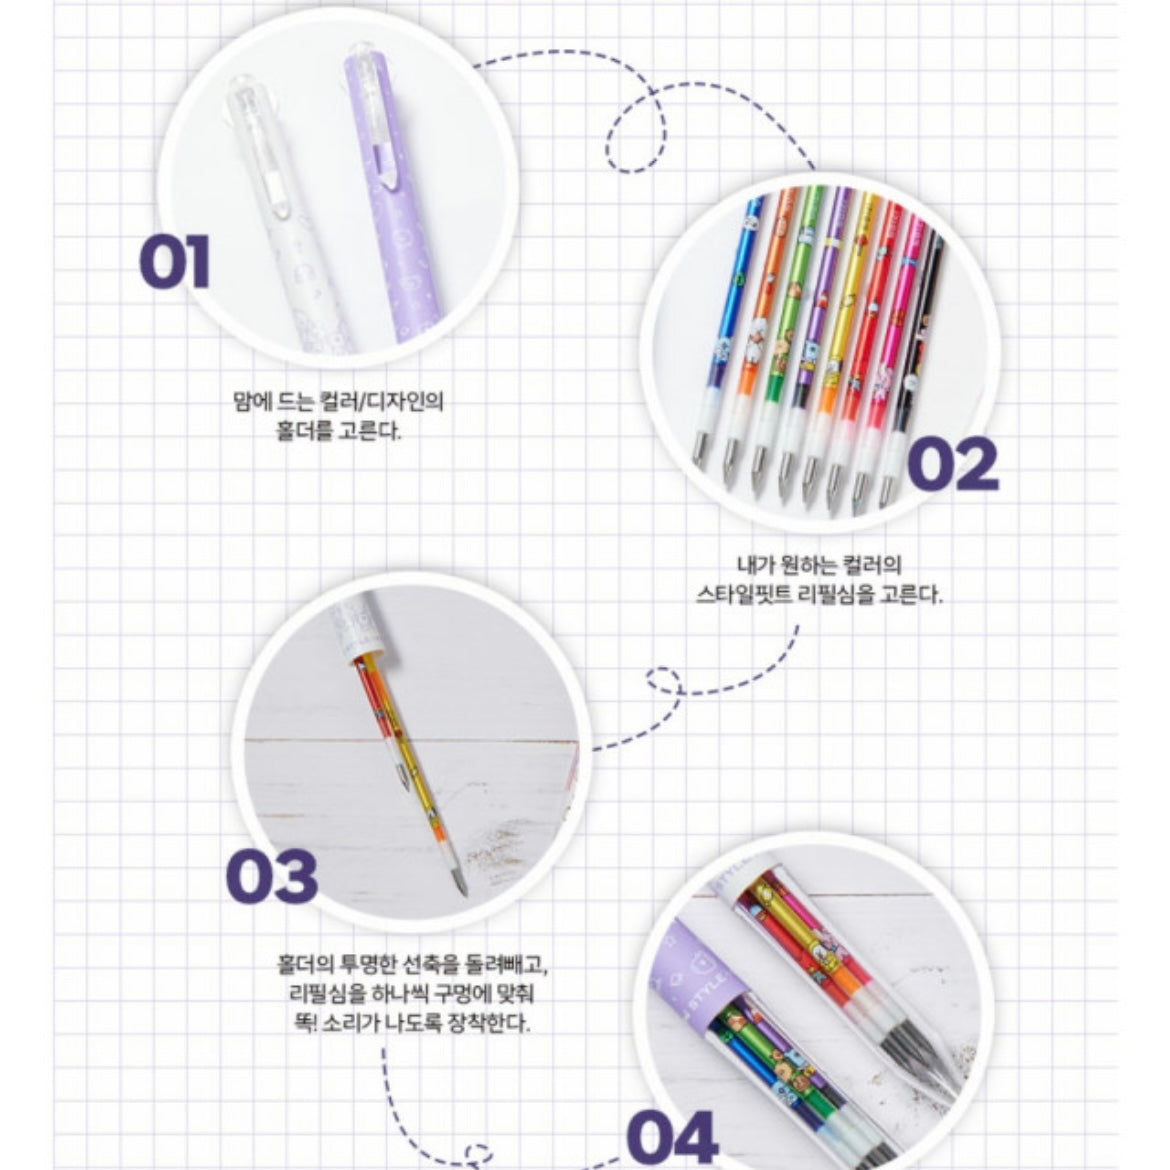 Uni Mitsubishi Style Fit Special Edition BT21 2 4 color Pen Set 8 refills